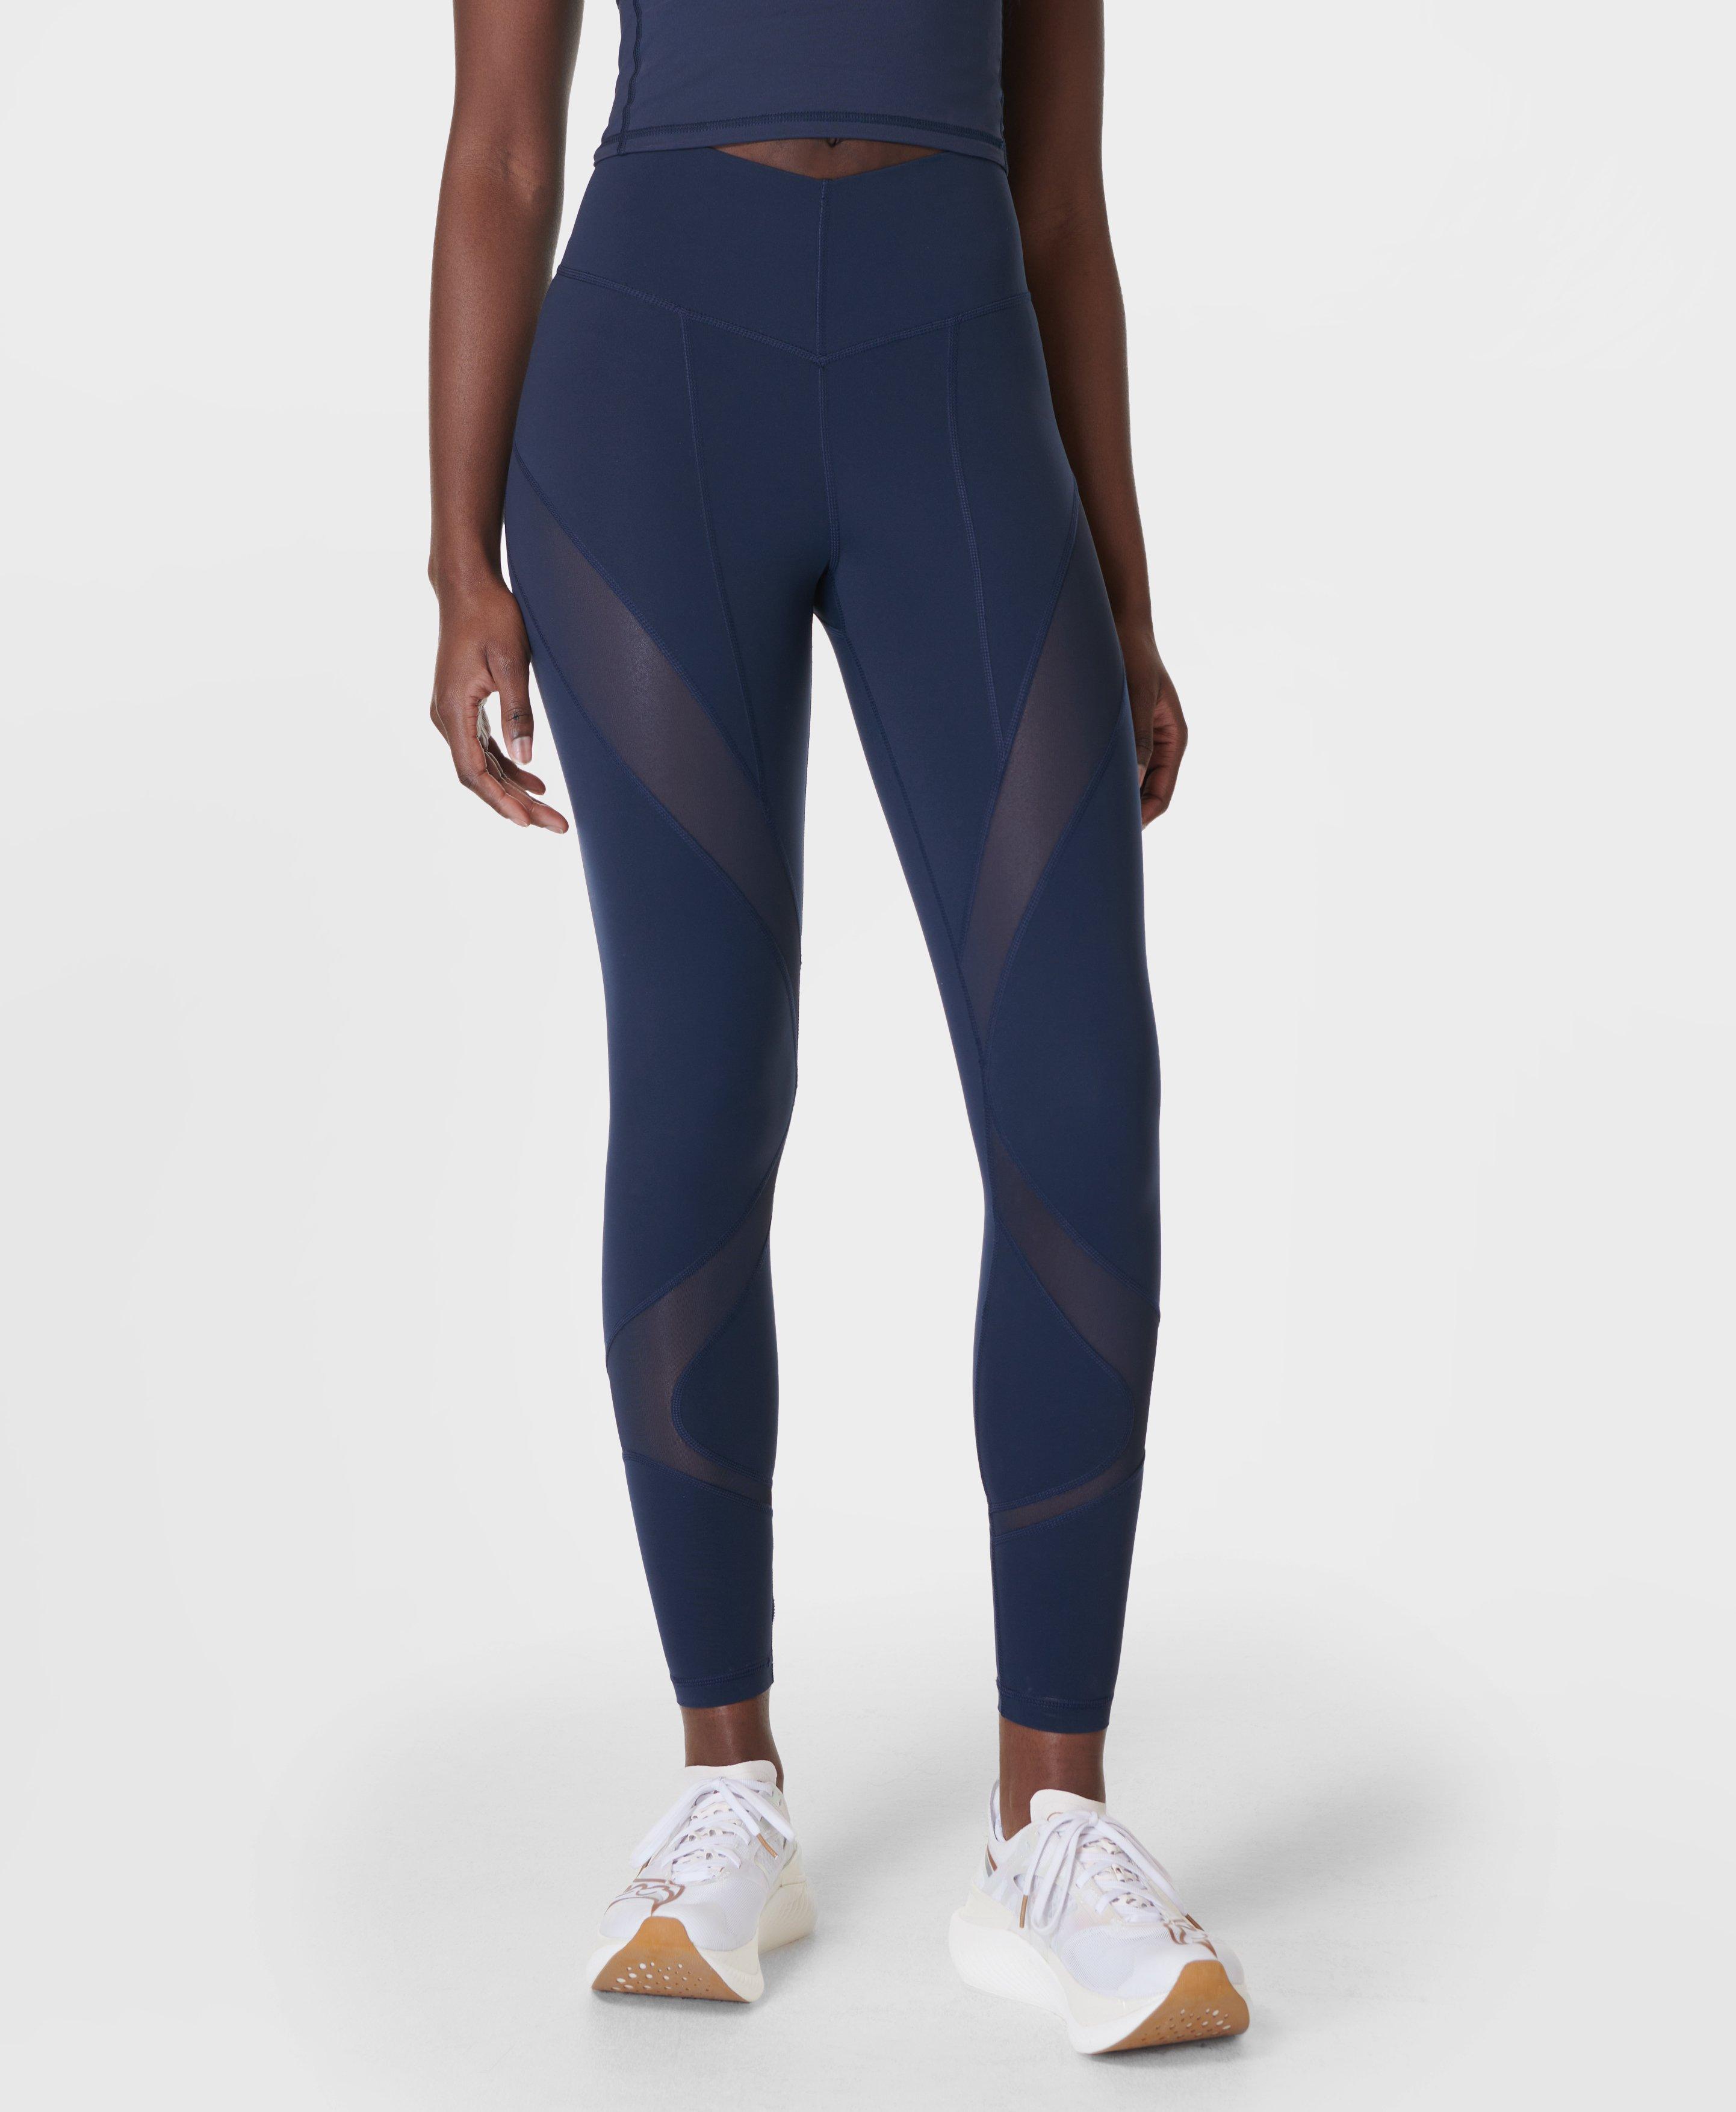 Navy Blue Sheer Mesh Womens Yoga Pants High Waist Running Leggings